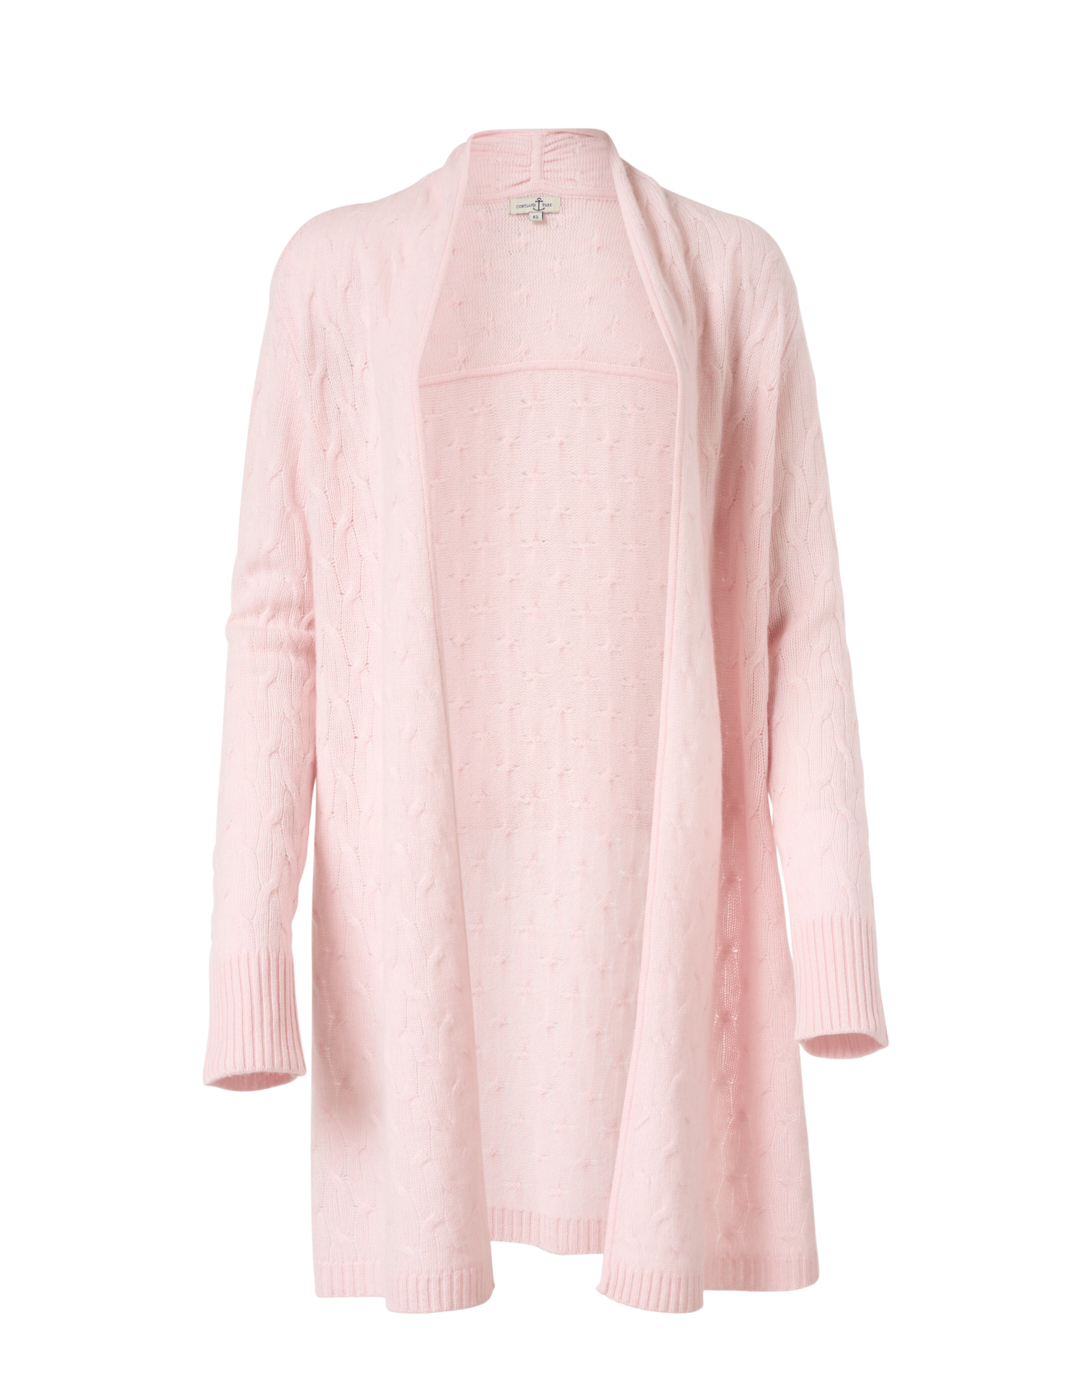 Light Pink Cashmere Cardigan Sweater 